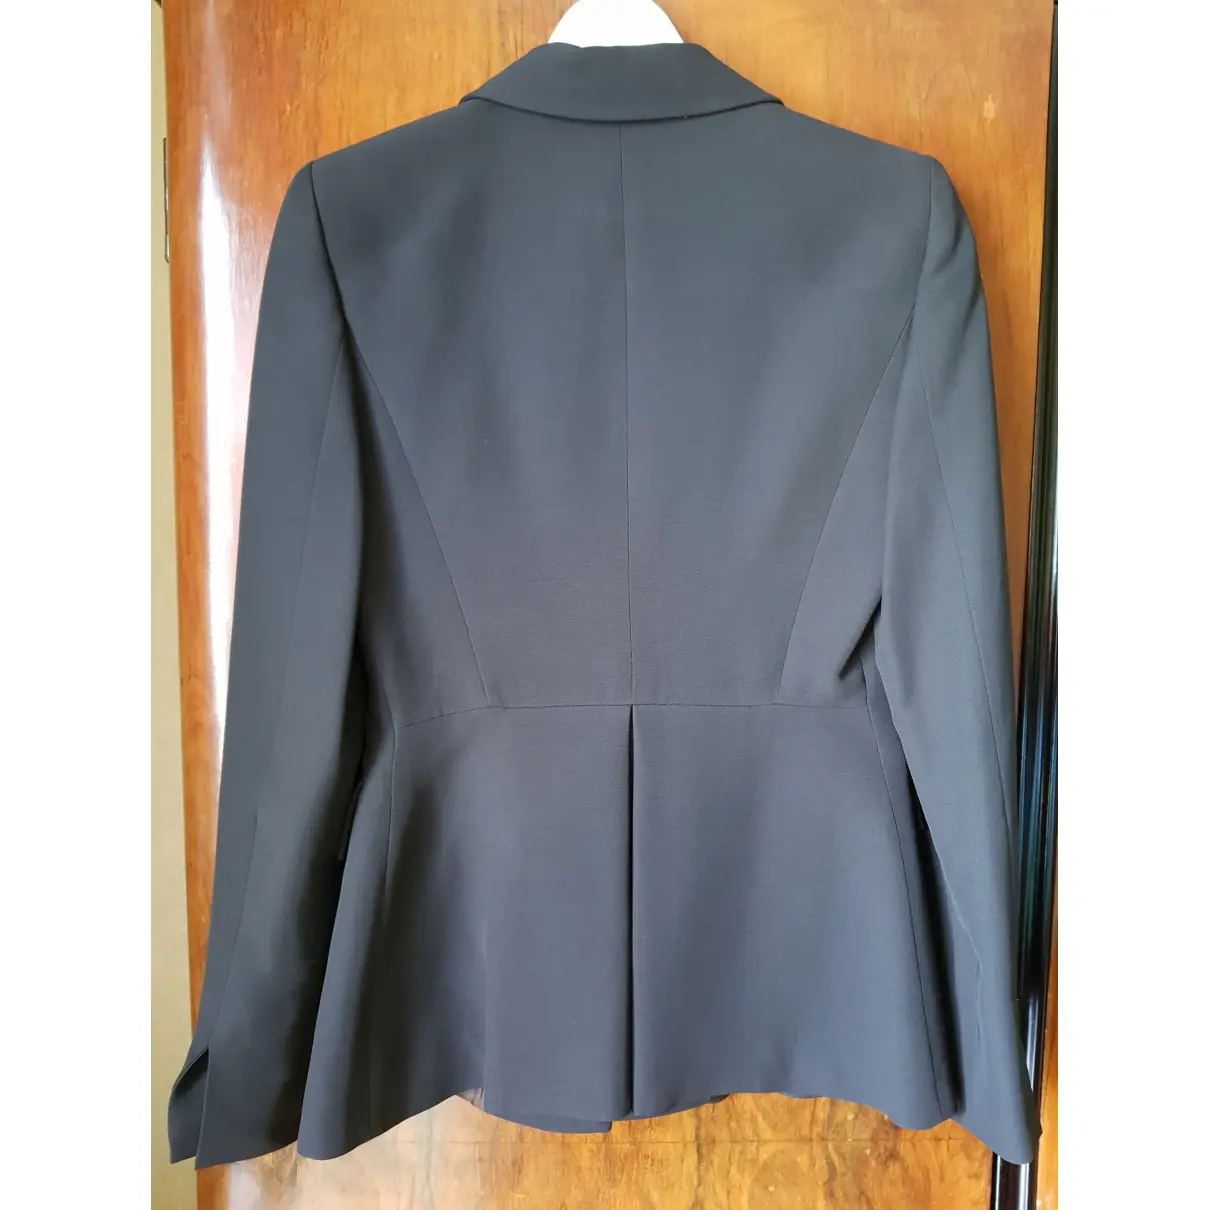 Buy Gianfranco Ferré Black Viscose Jacket online